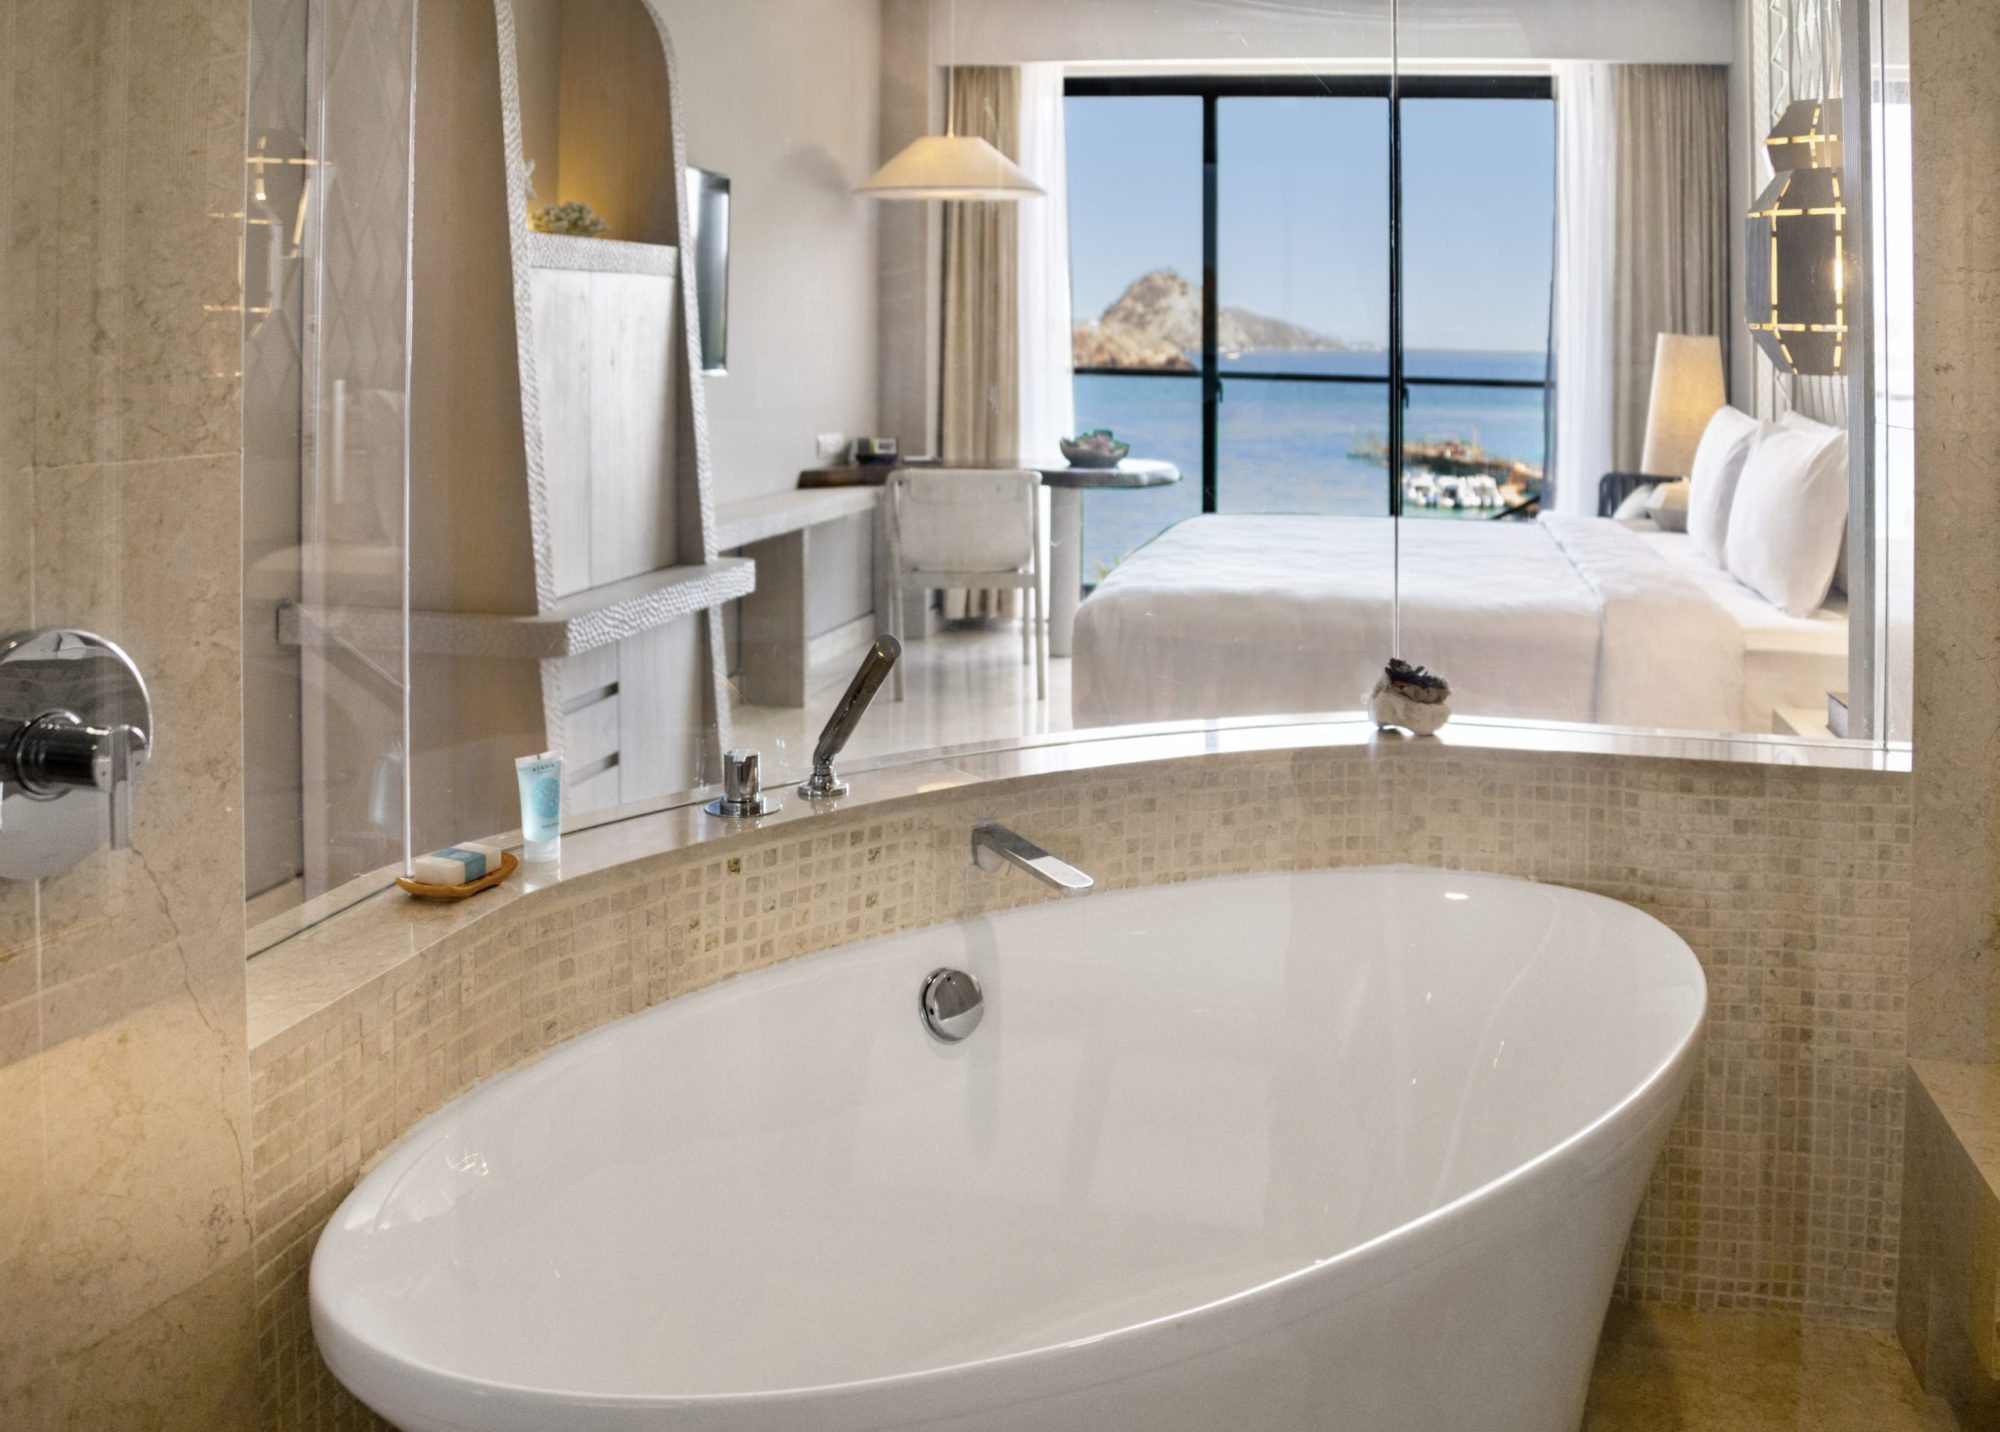 Komodo's best luxury hotel: the bathroom